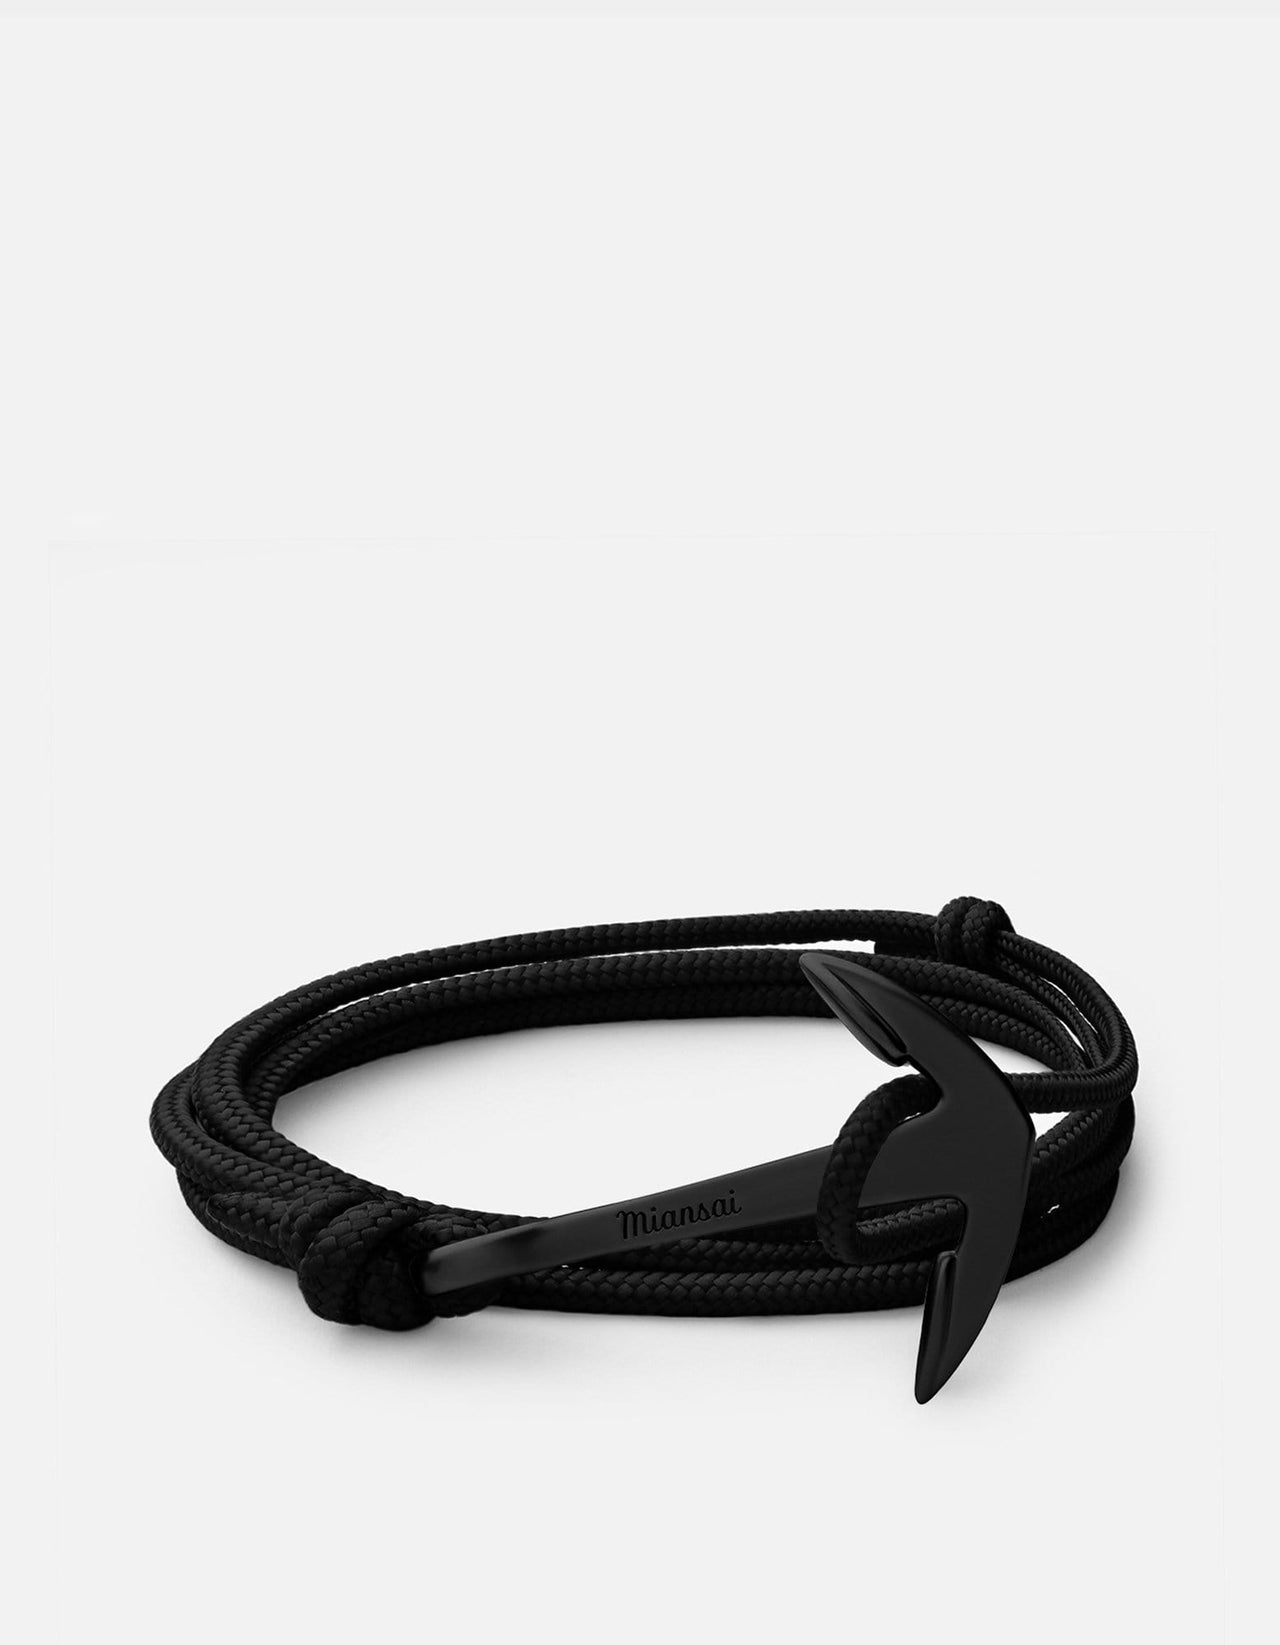 Anchor Leather Black Bracelet